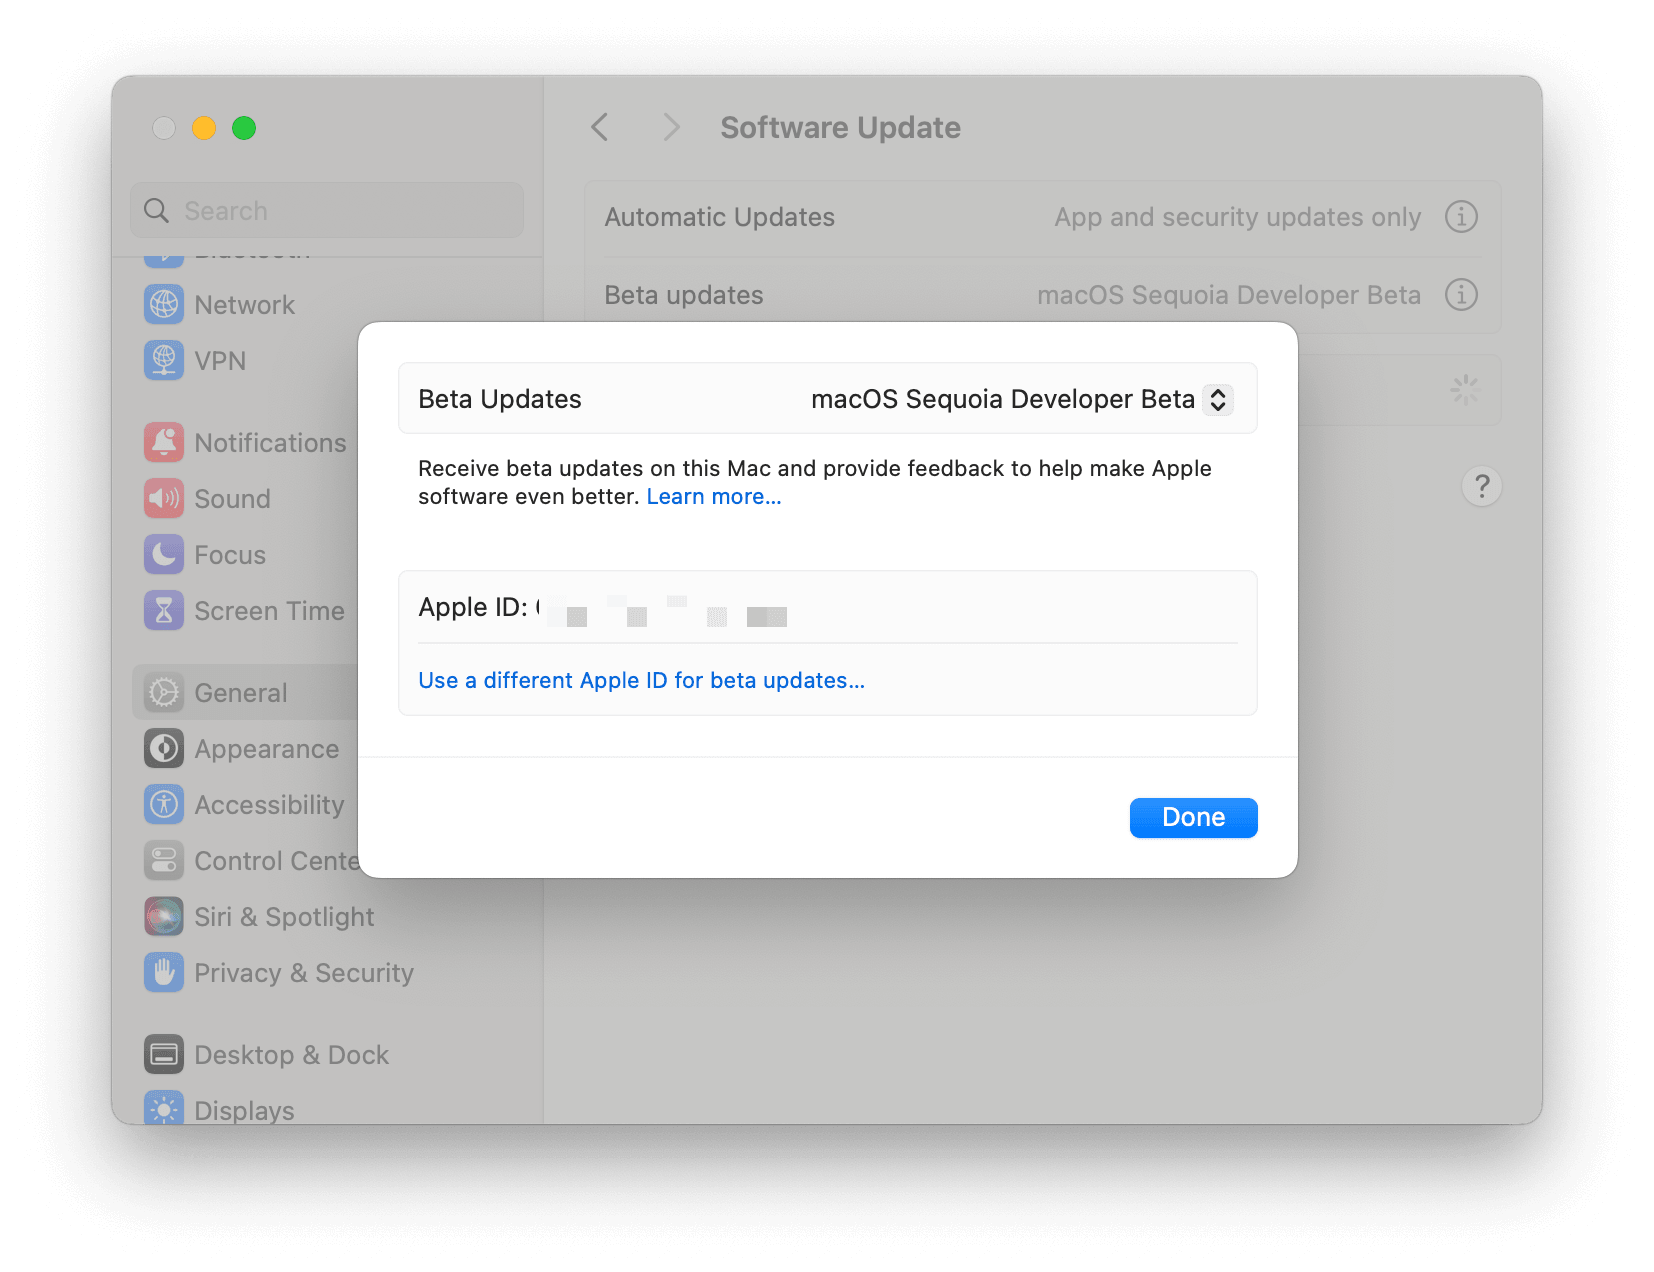 Select macOS Sequoia Developer Beta